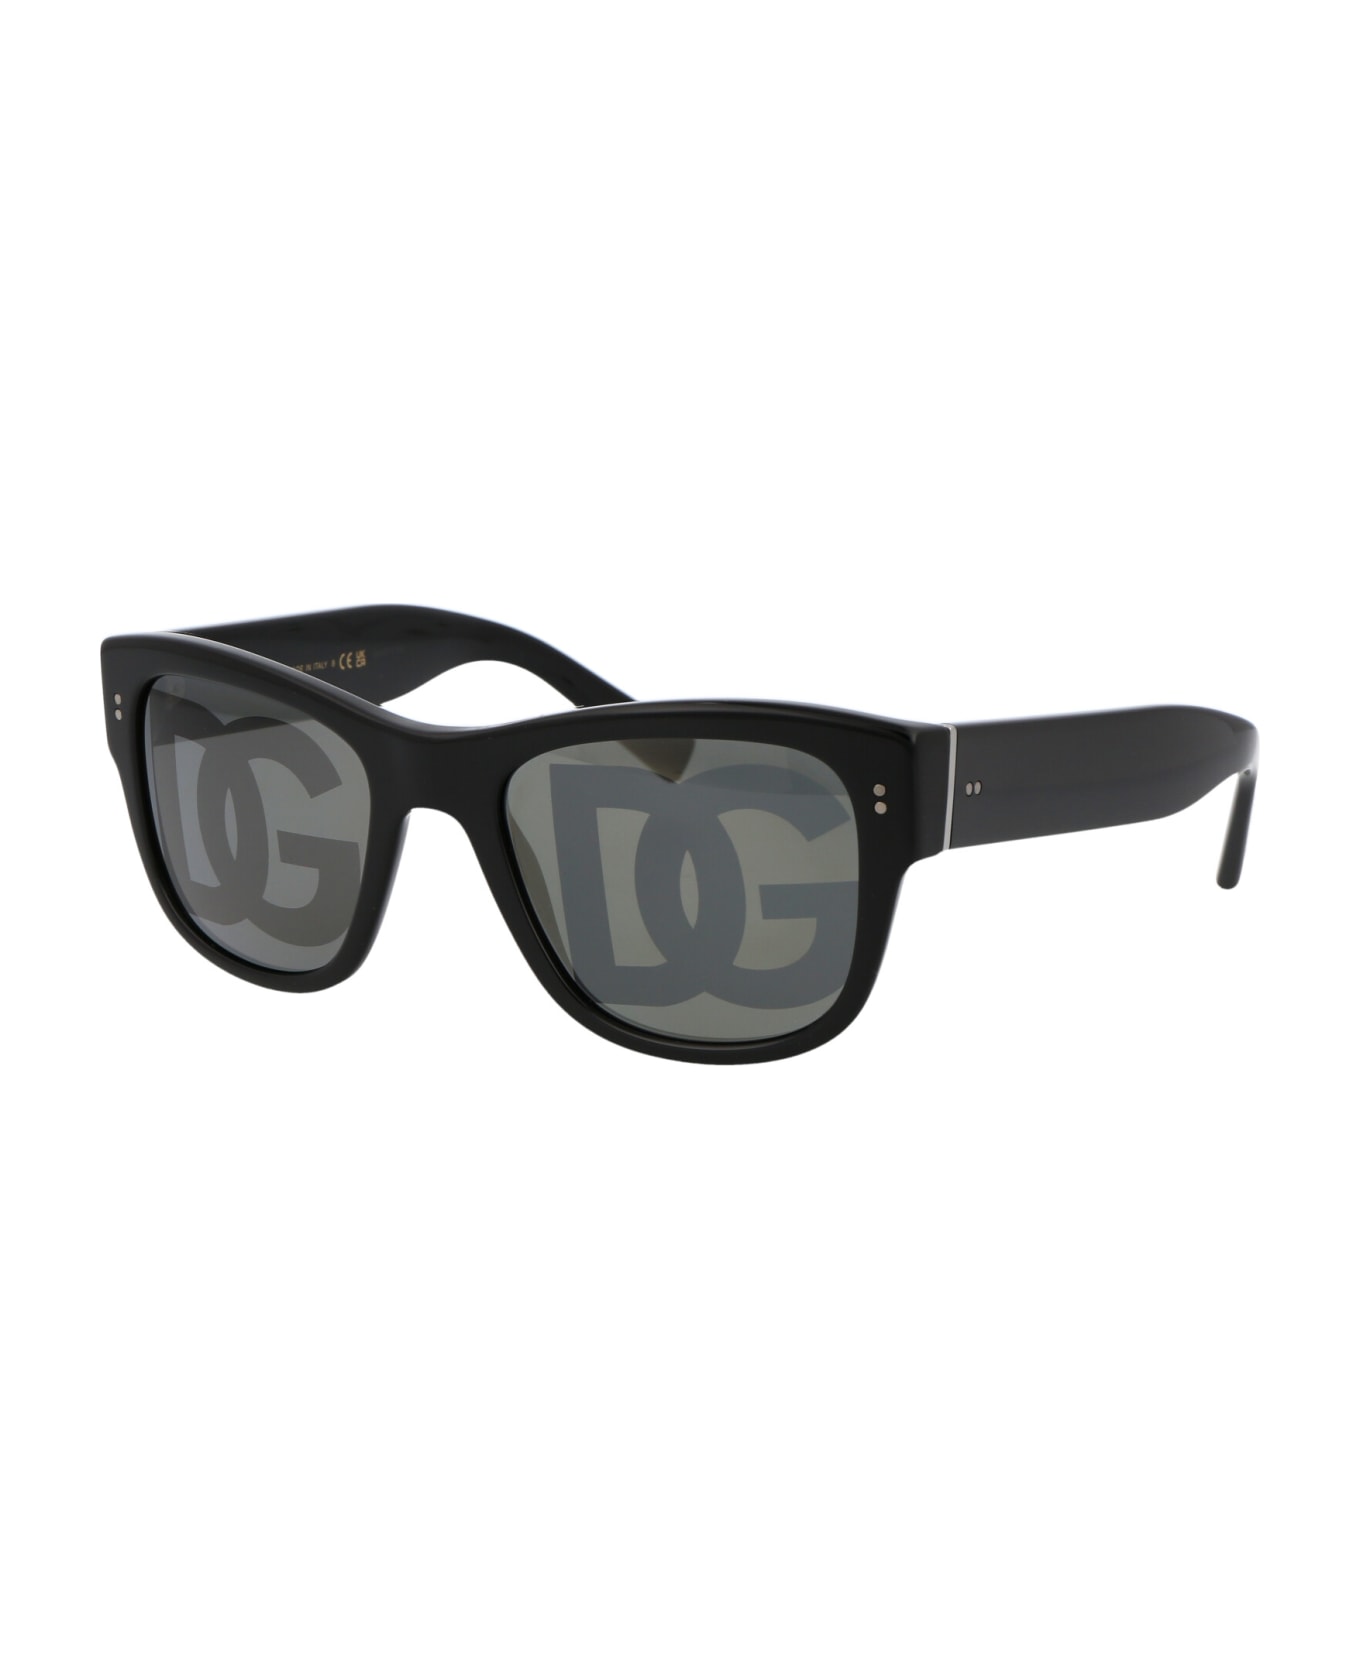 Dolce & Gabbana Eyewear 0dg4338 Sunglasses - 501/M BLACK サングラス